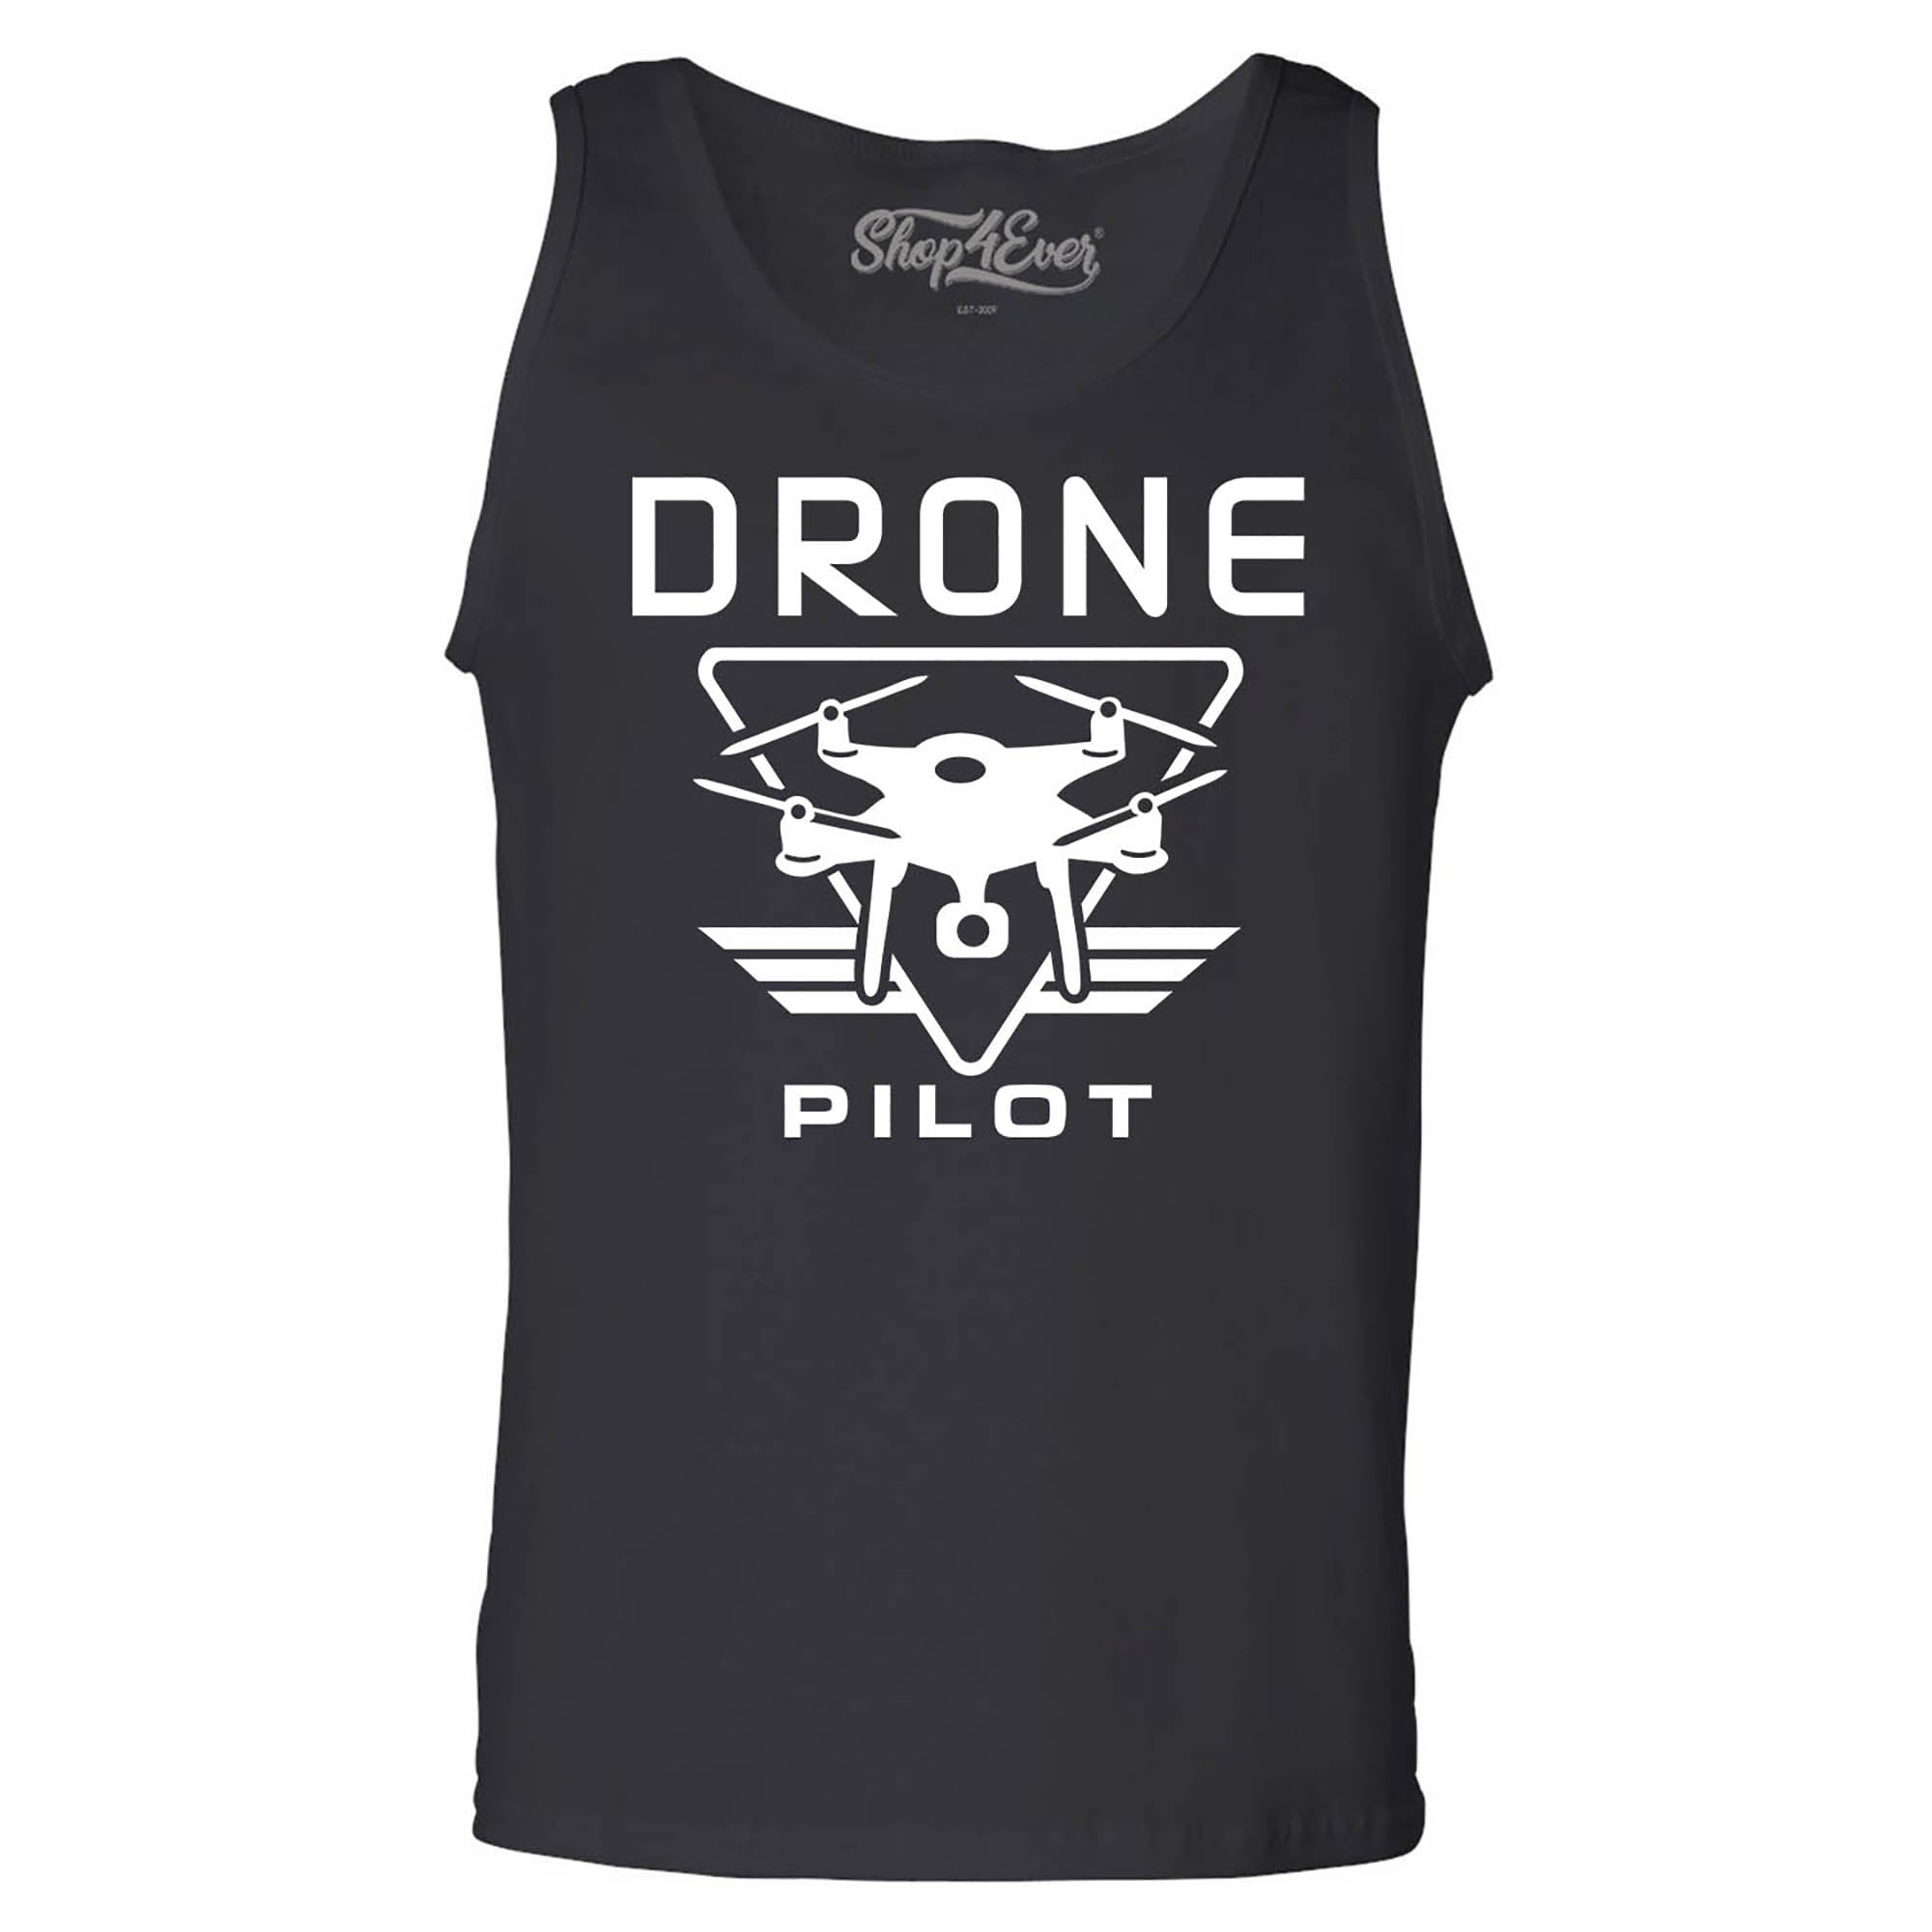 Drone Pilot Men's Tank Top